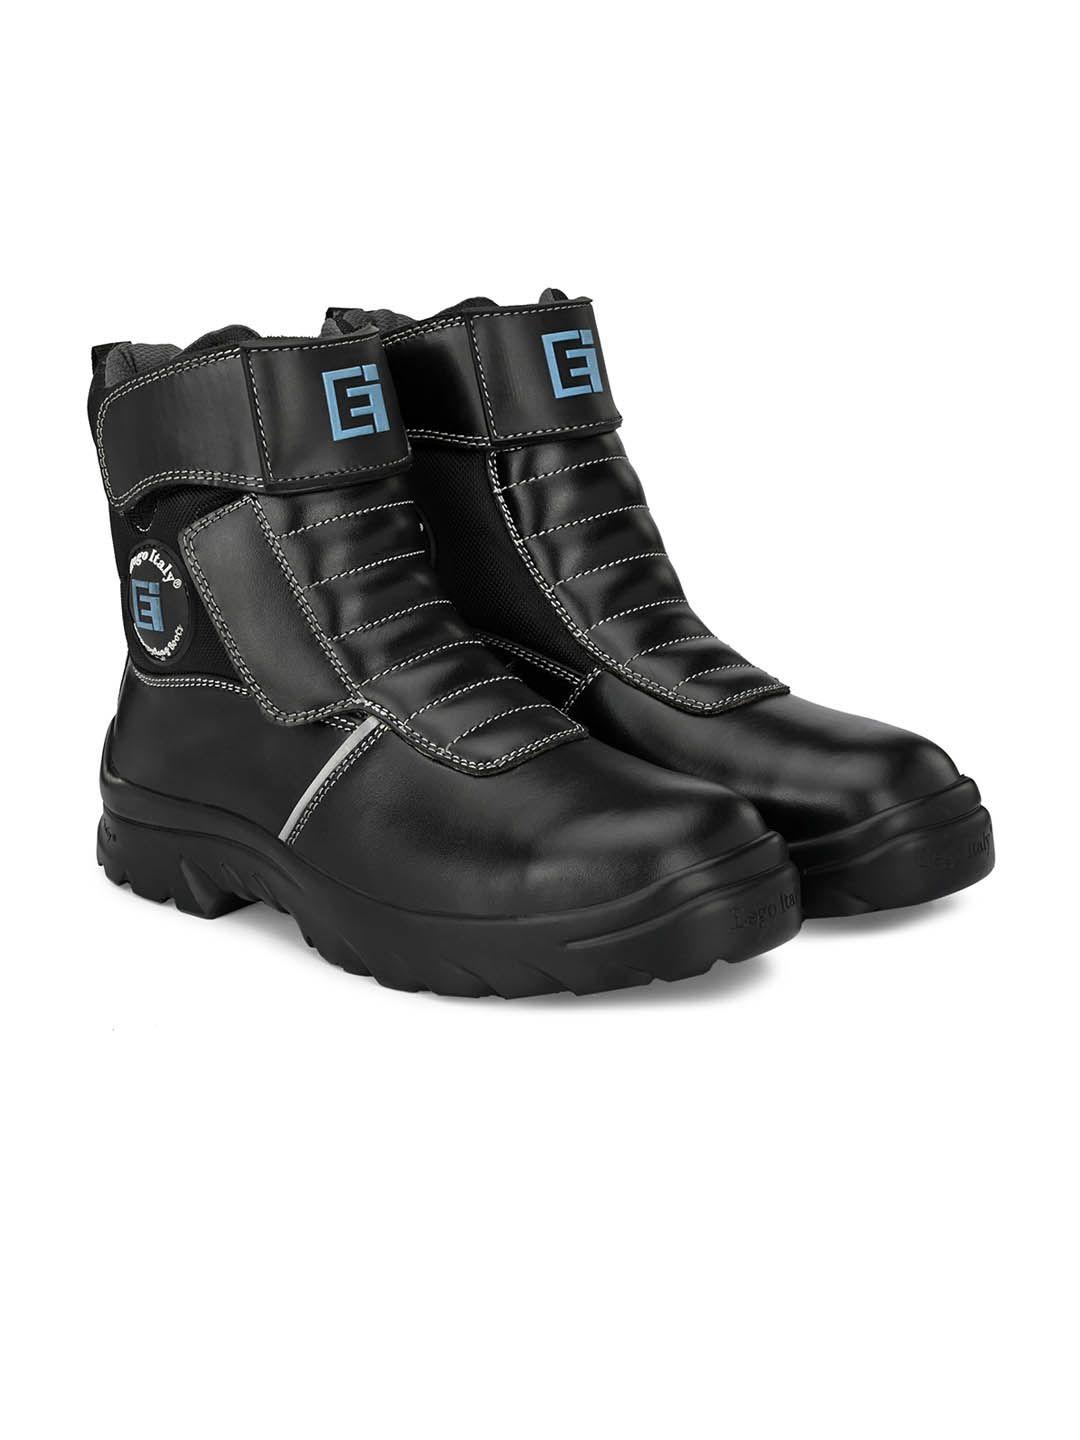 eego italy men black solid leather biker  boots